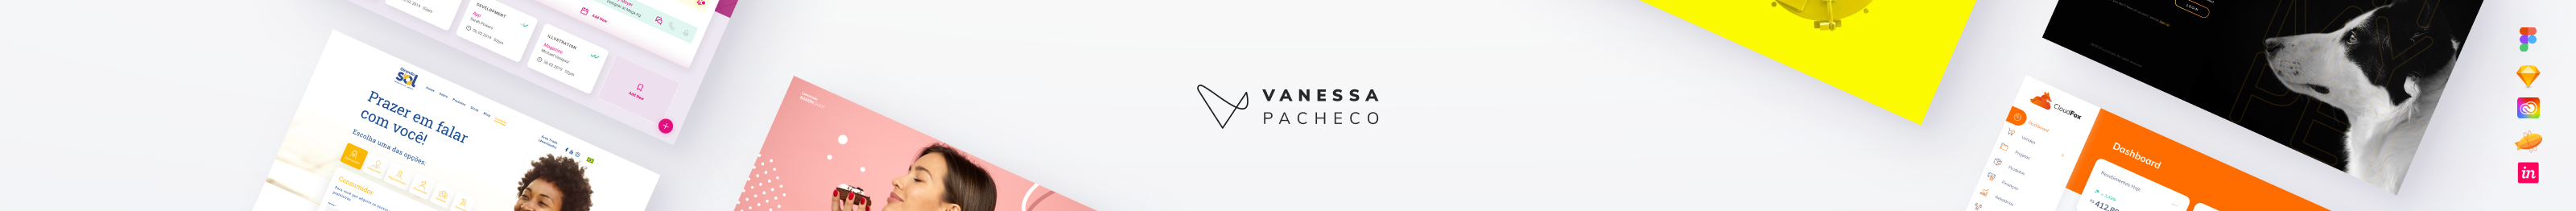 Vanessa Pachecos profilbanner